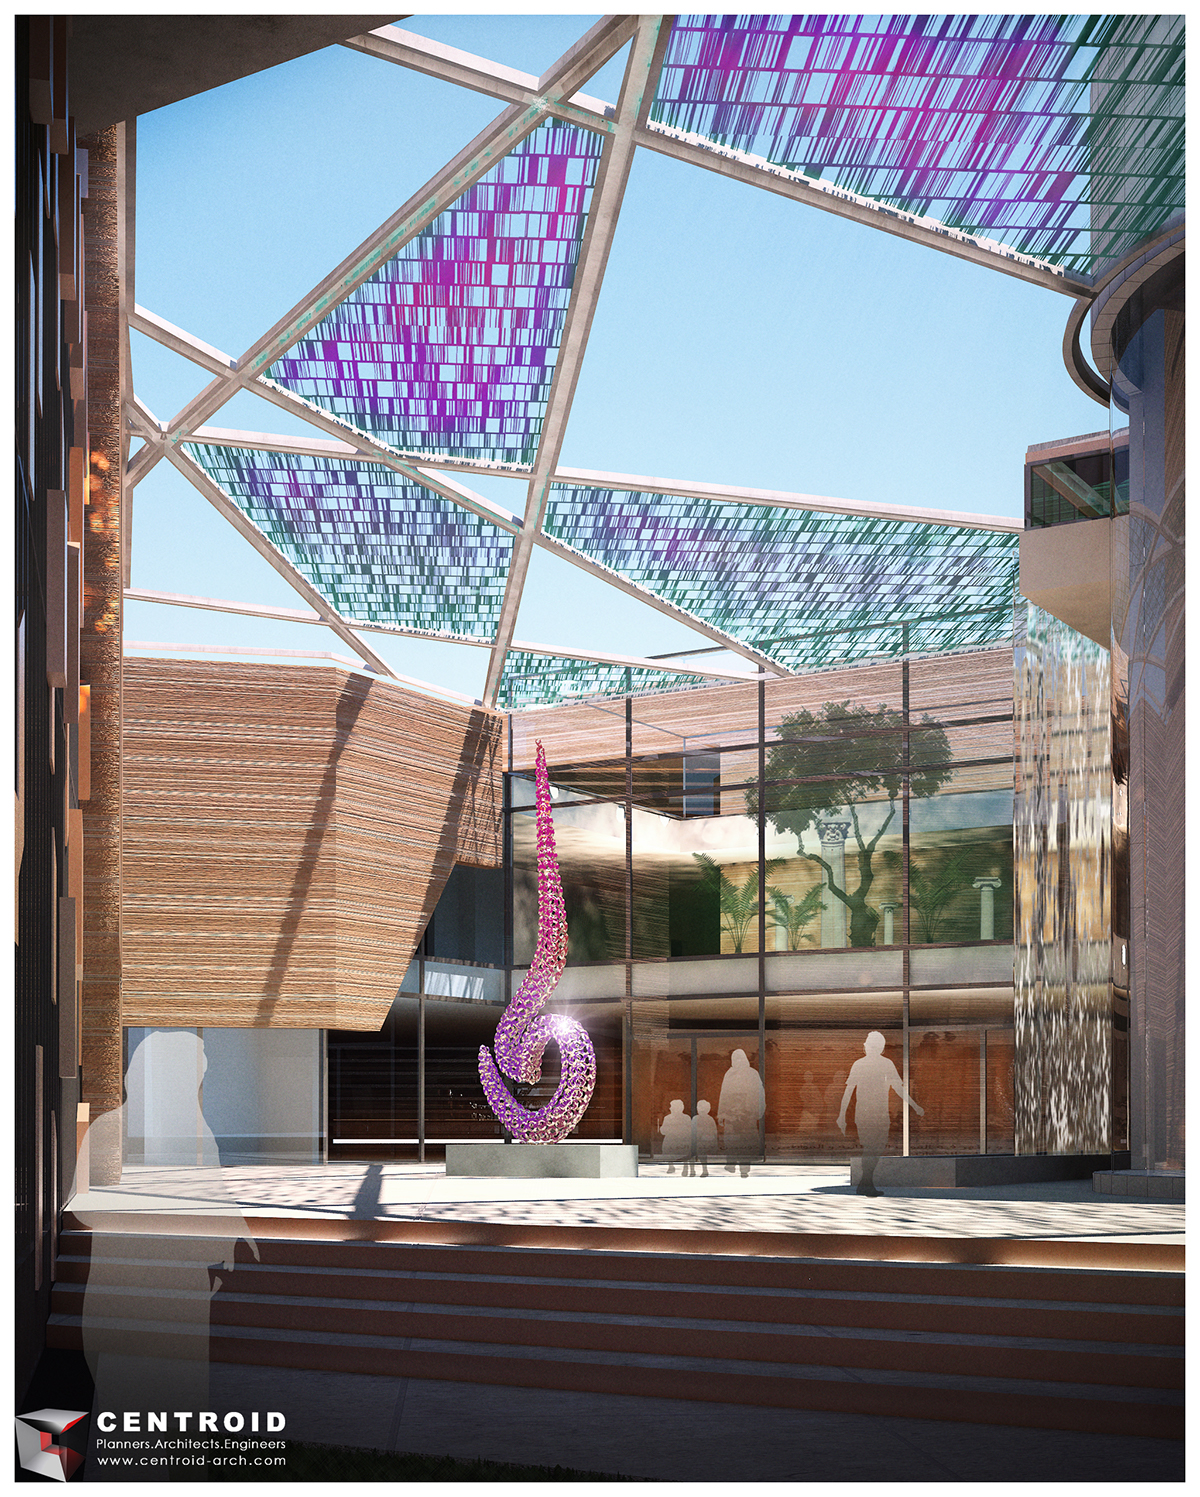 Kuwait Design proposals Architecture Proposals design competitions architecture competitions concept design culture design Culture projects architecture design 3D Visualization Centroid